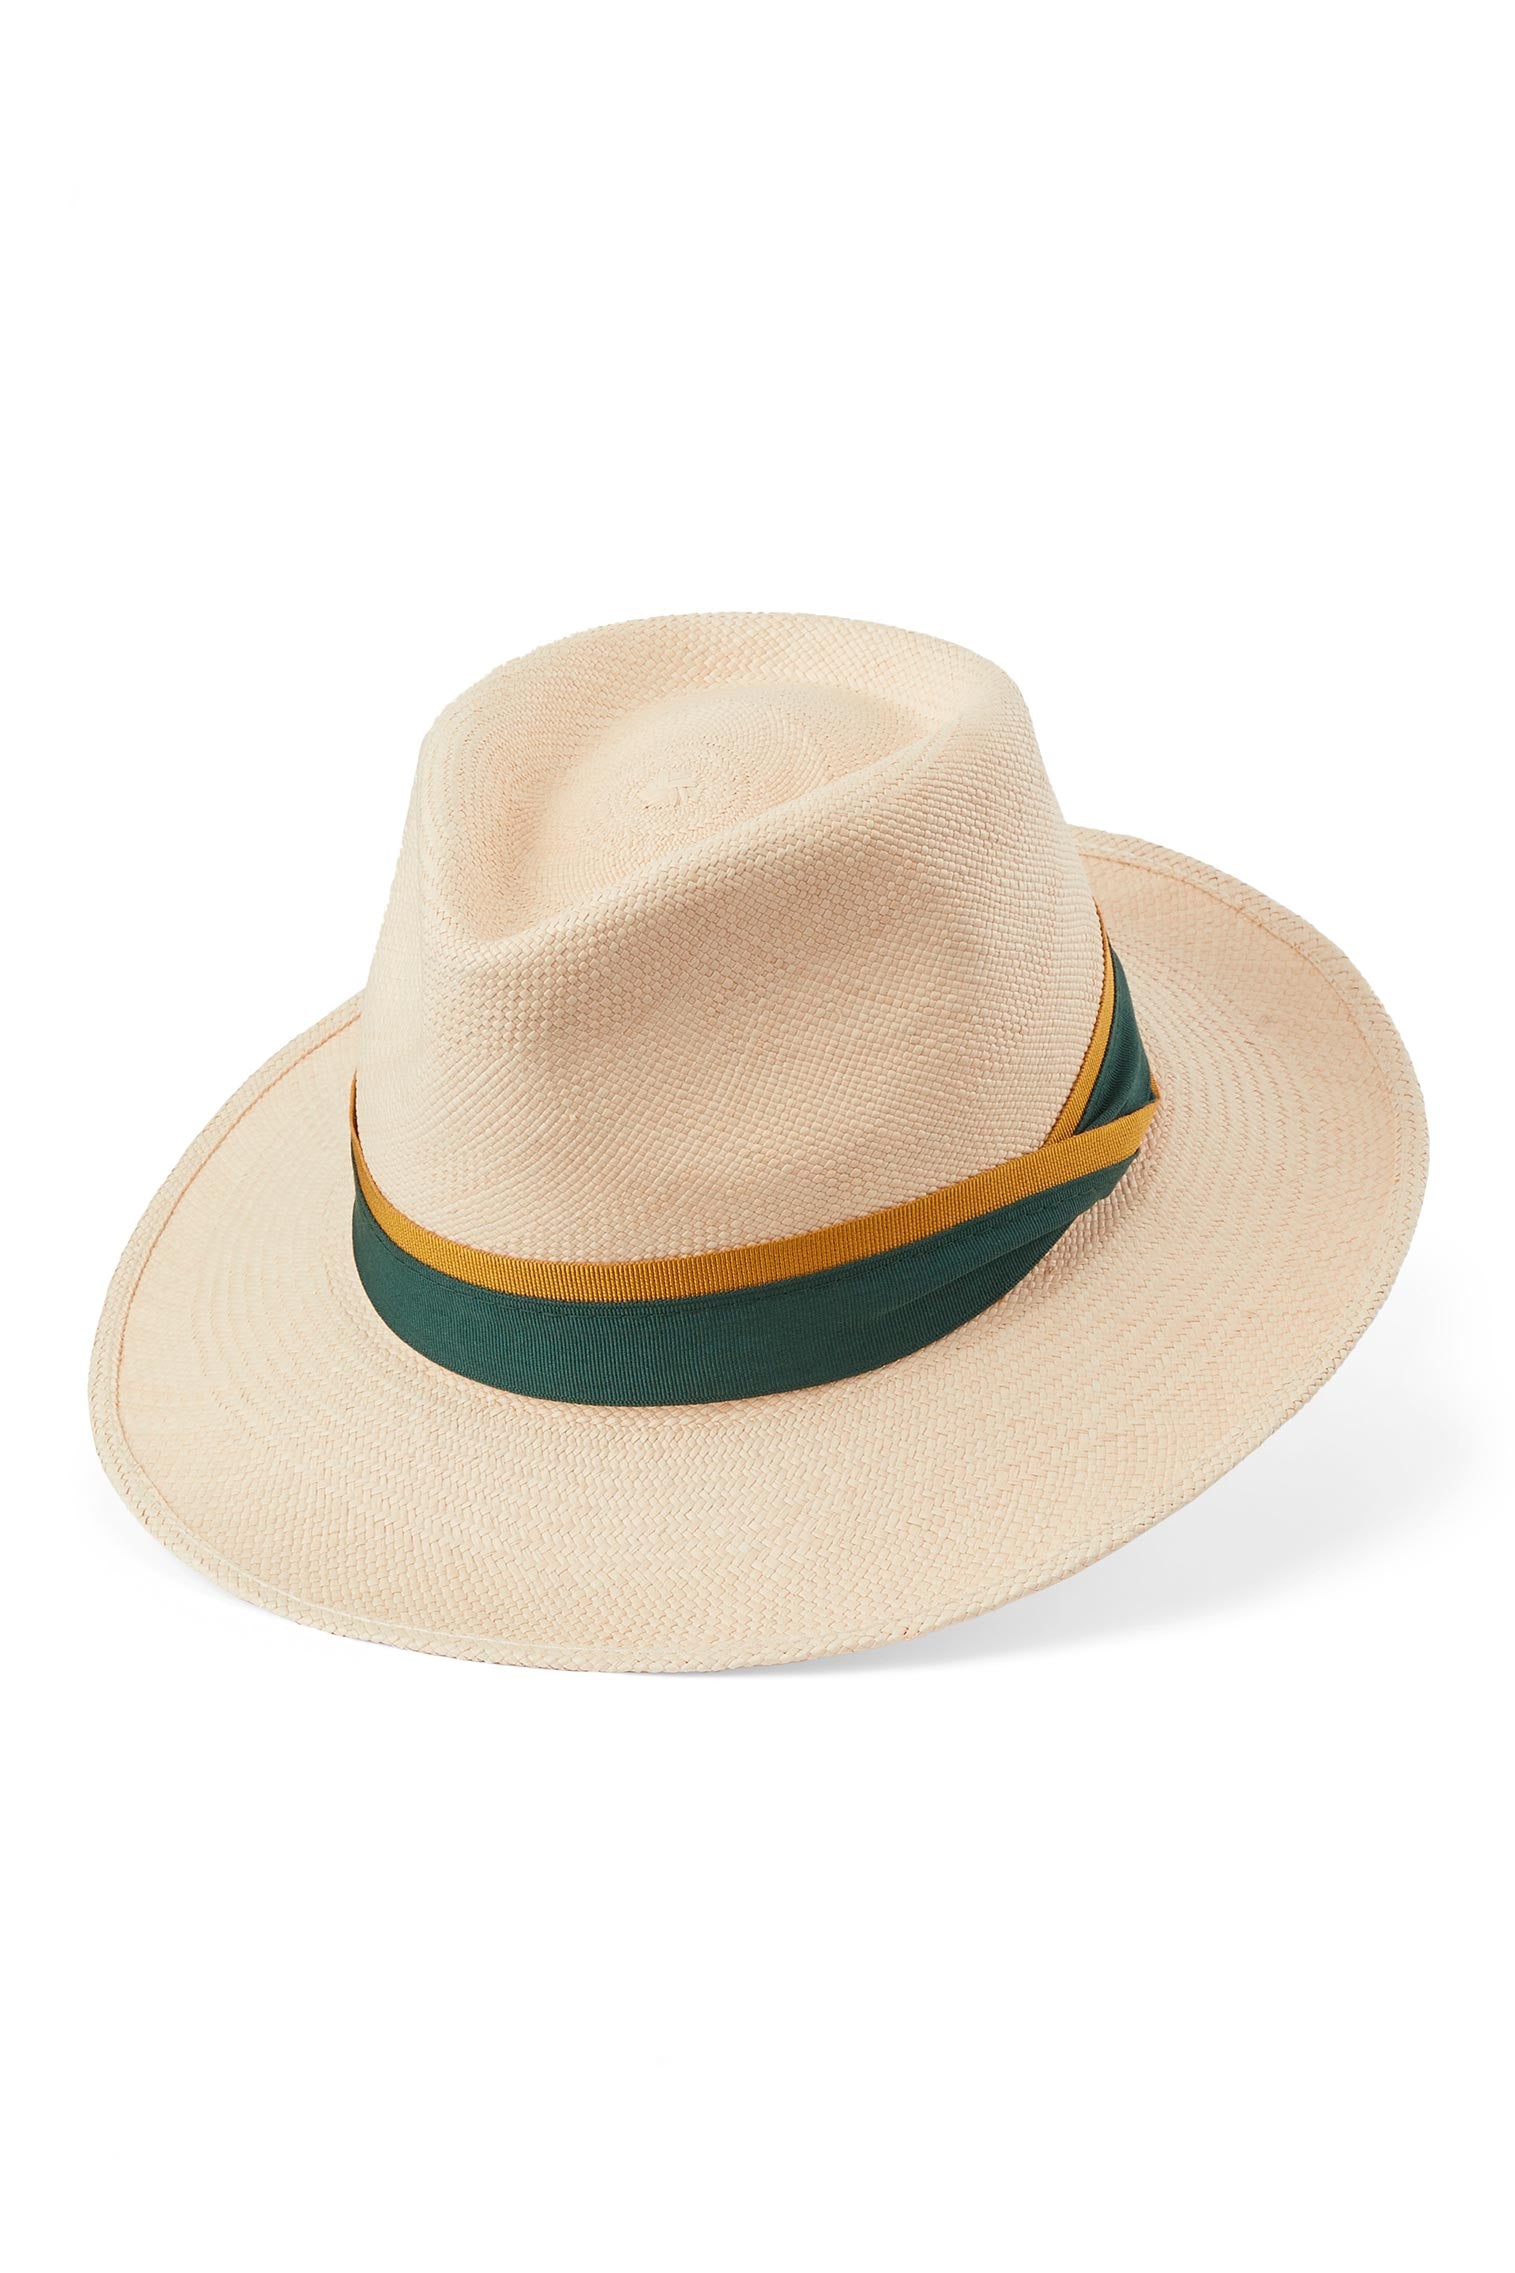 Highgrove Panama - Henley Royal Regatta Hats - Lock & Co. Hatters London UK